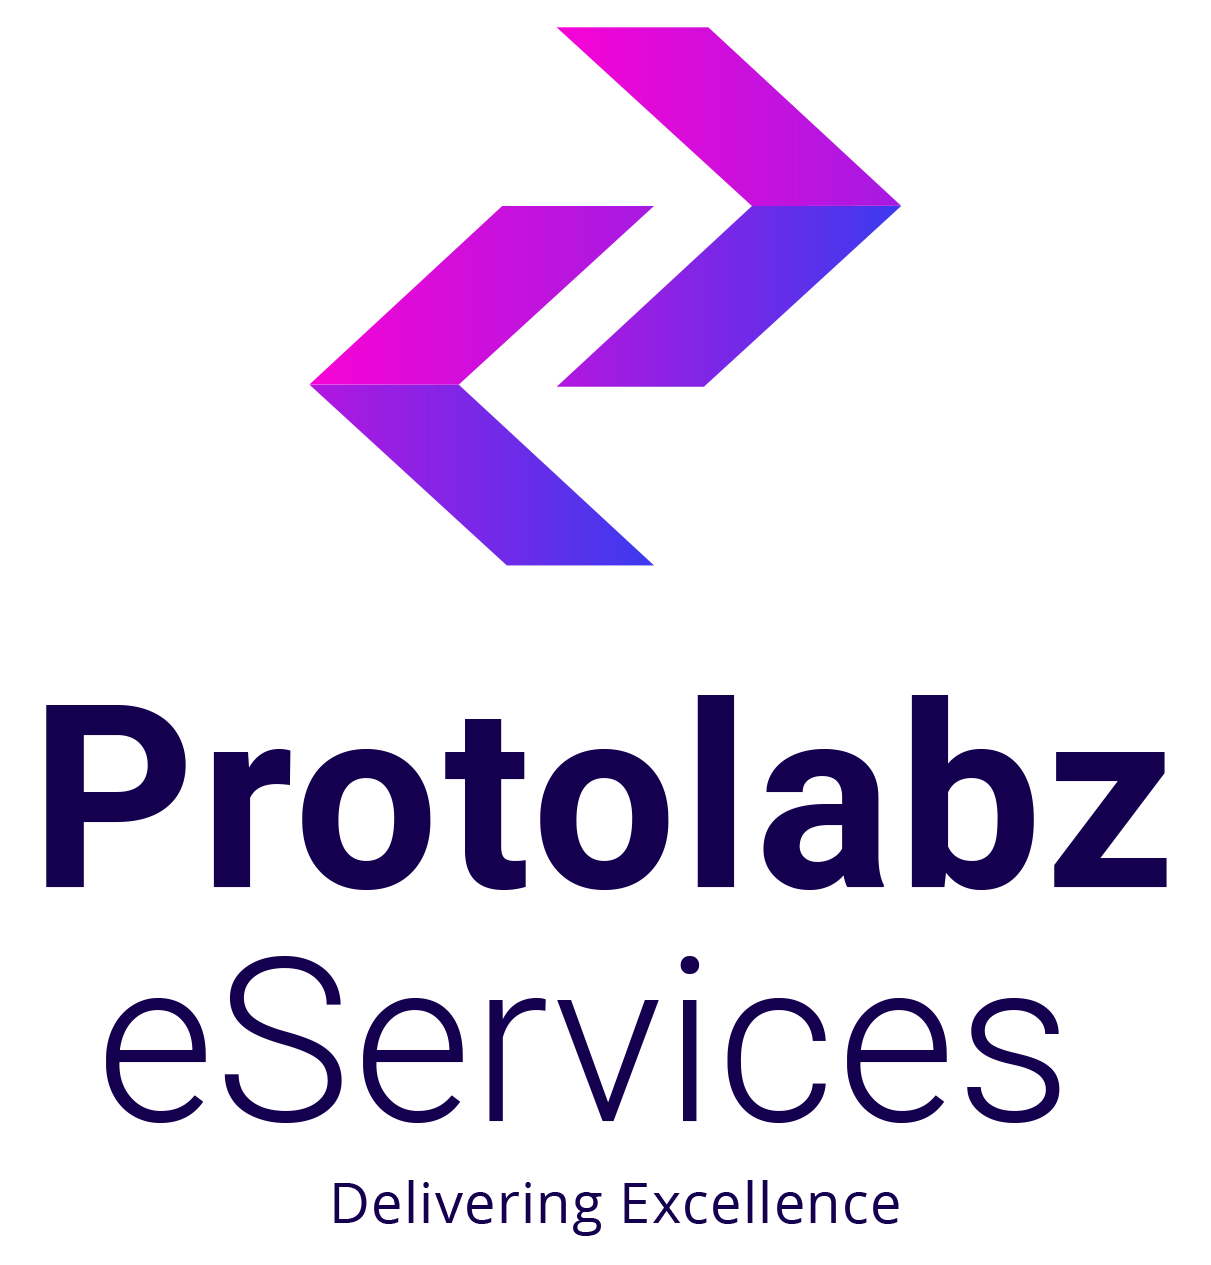 Protolabz eServices Logo